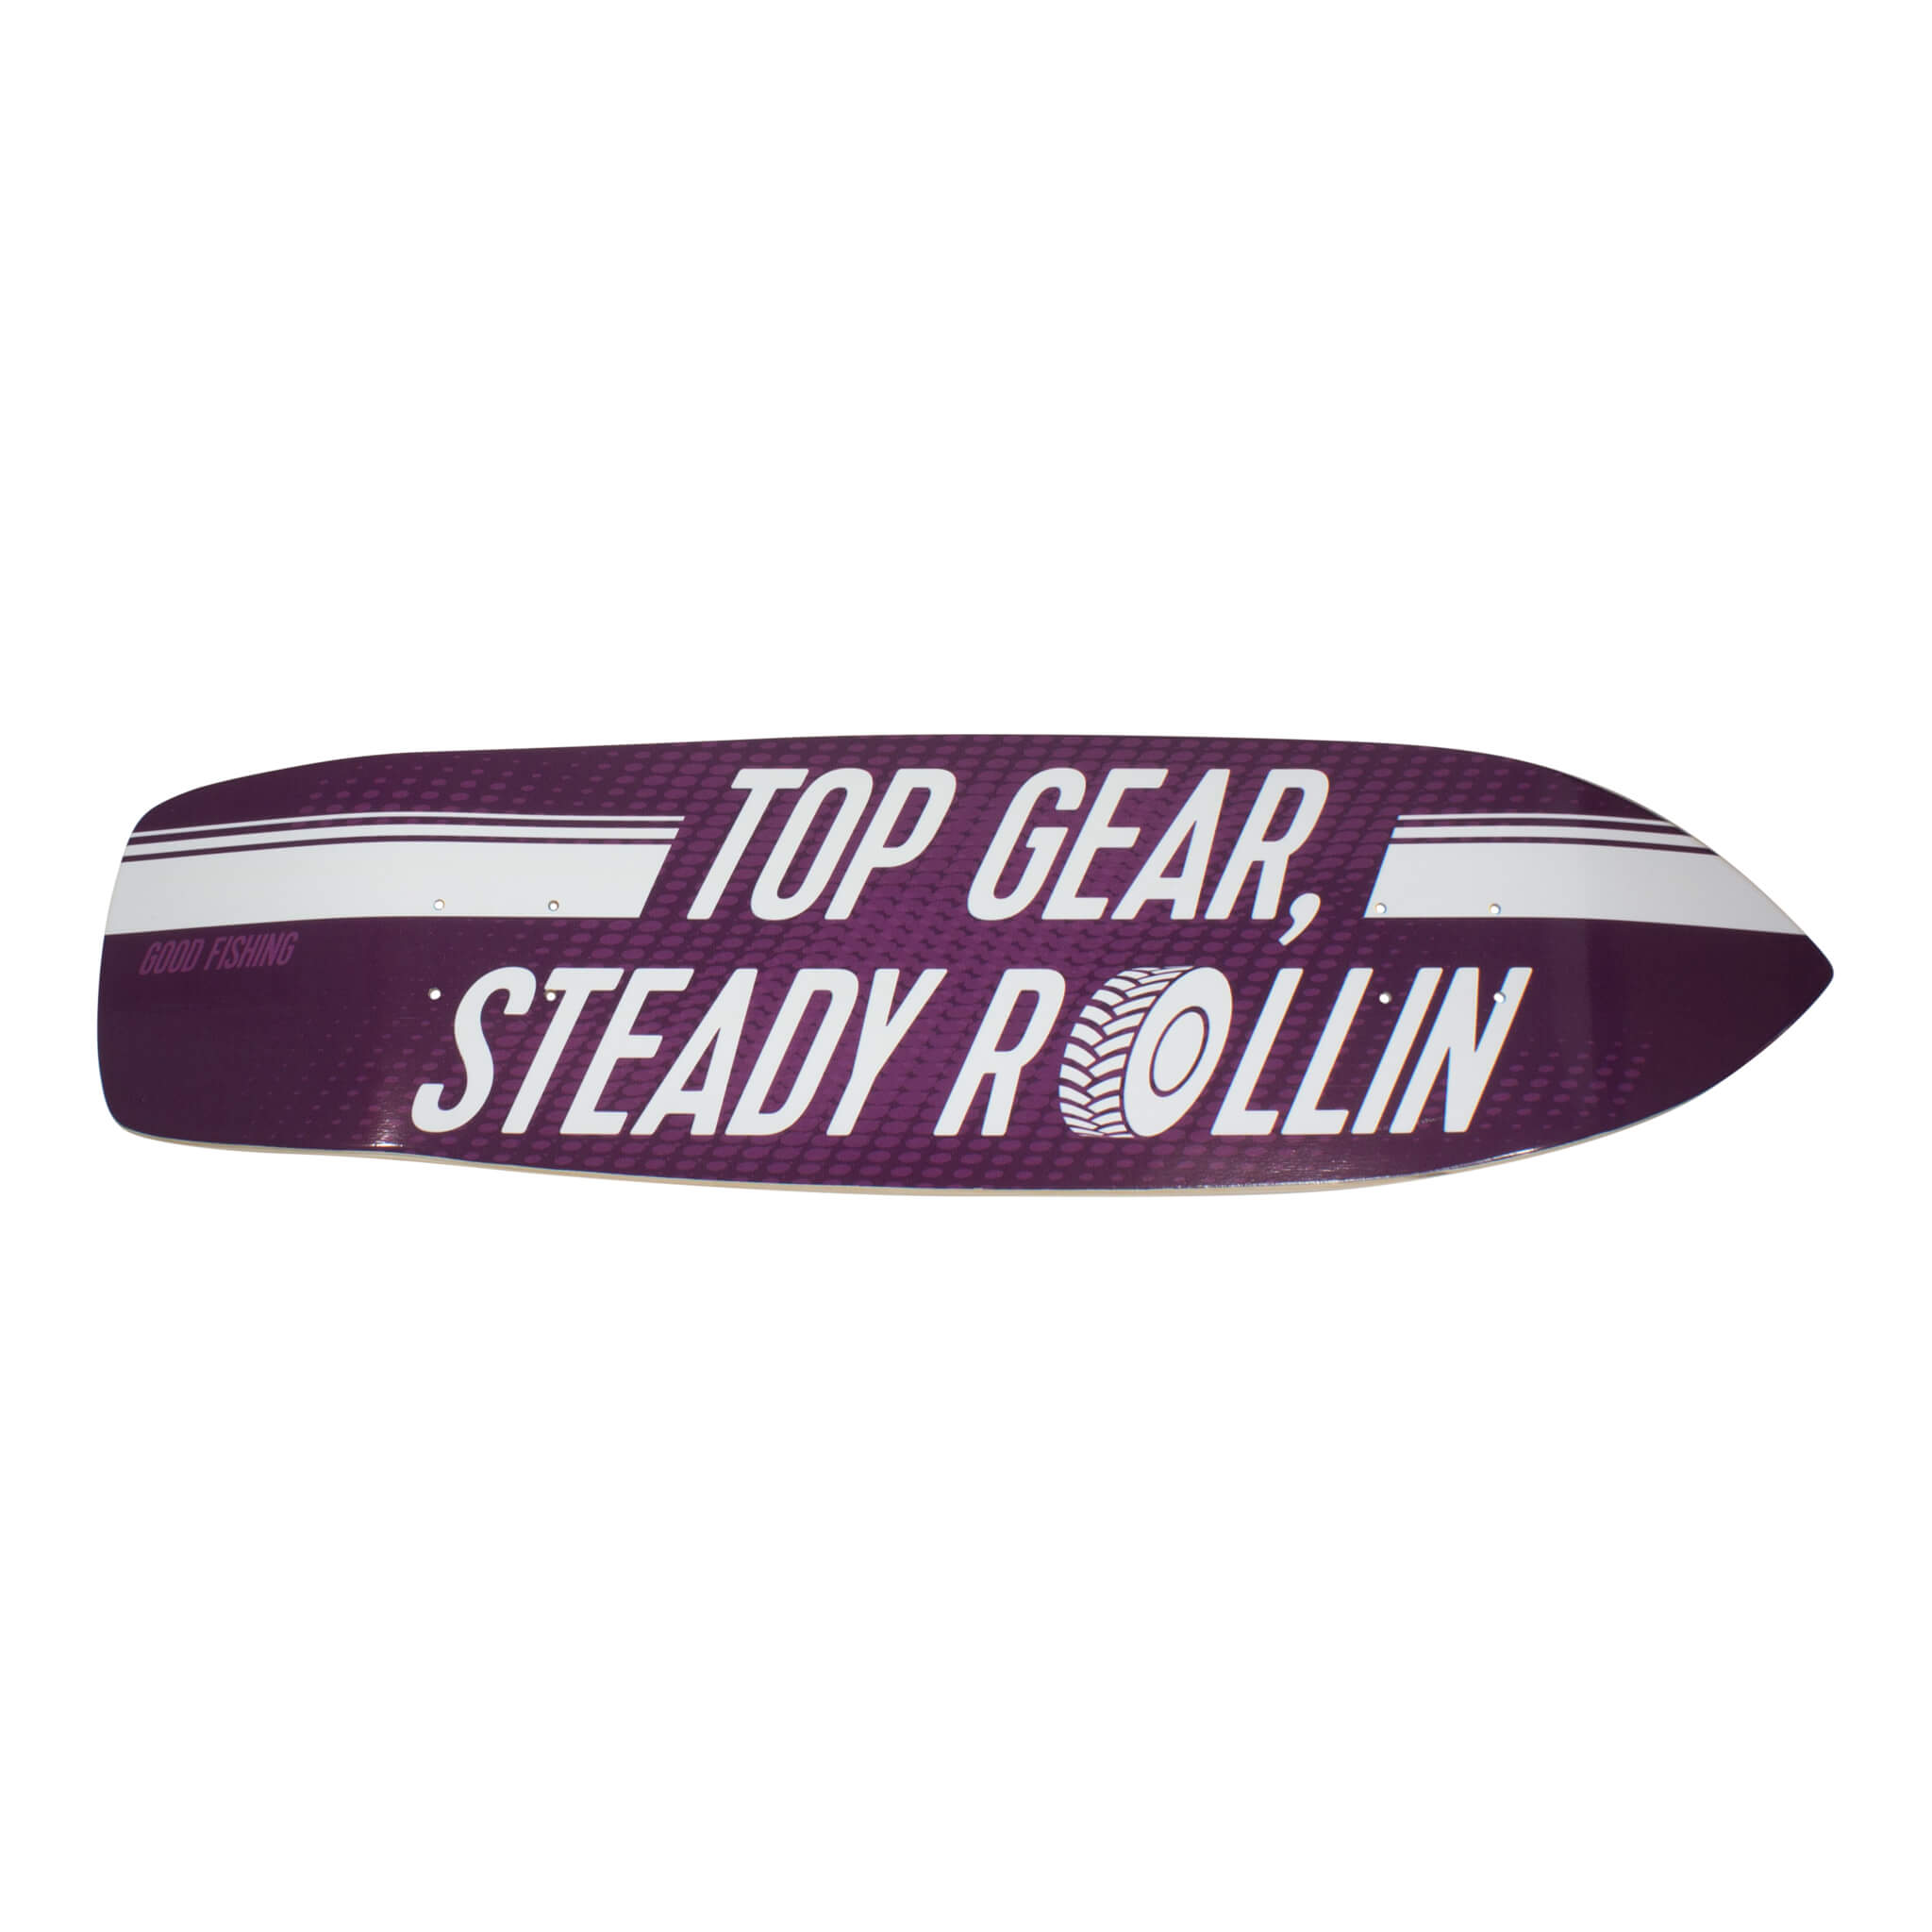 Good_Fishing_TGSR_Top_Gear_Steady_Rollin_Skate_Deck_3.jpg